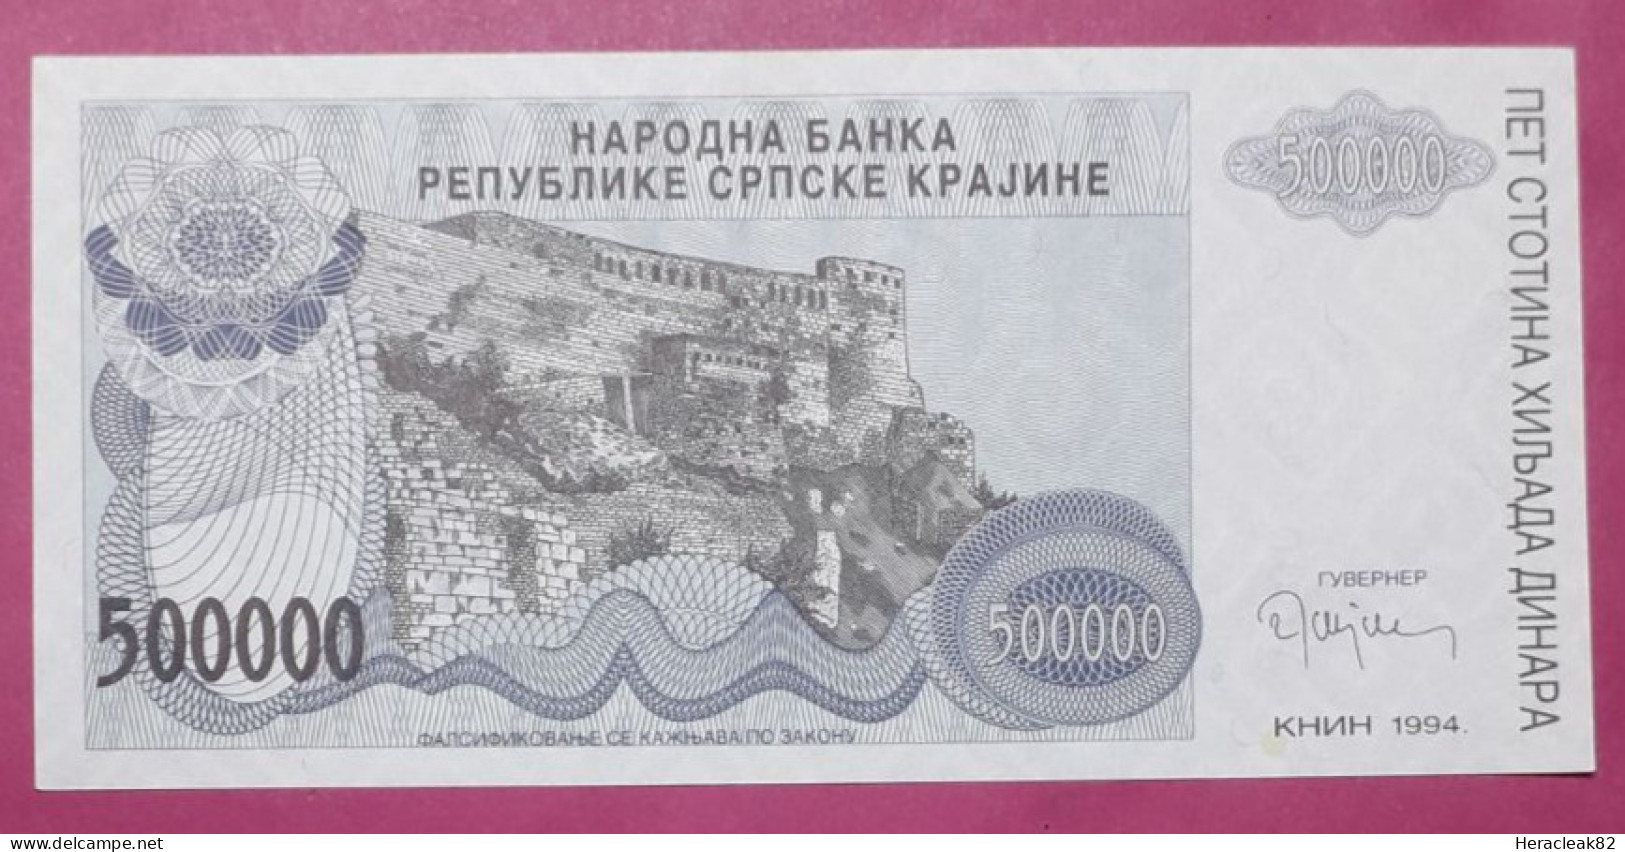 Republika Srpska Krajina 500000 Dinara 1994, Knin UNC. - Croatie